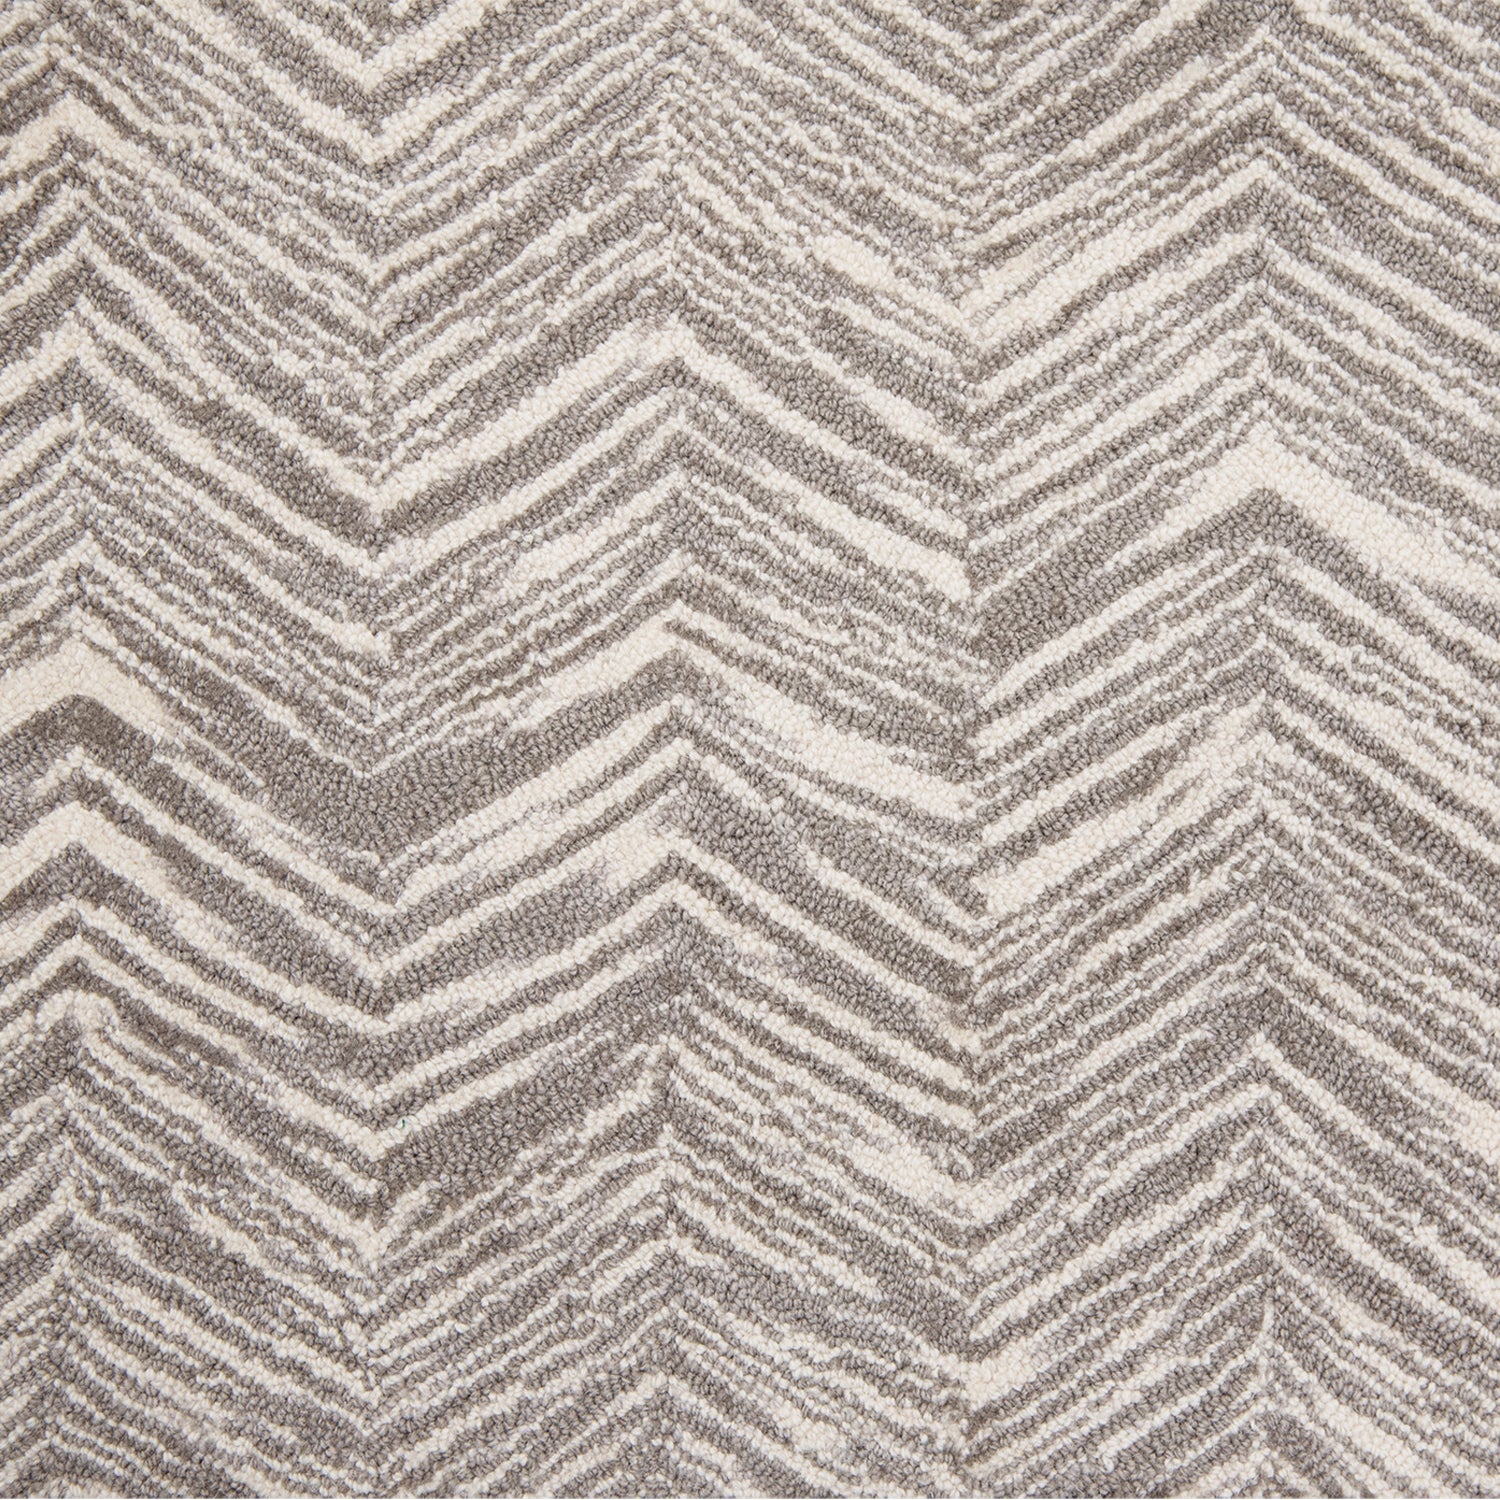 Wool broadloom carpet swatch in a painterly herringbone print in sable on a cream field.